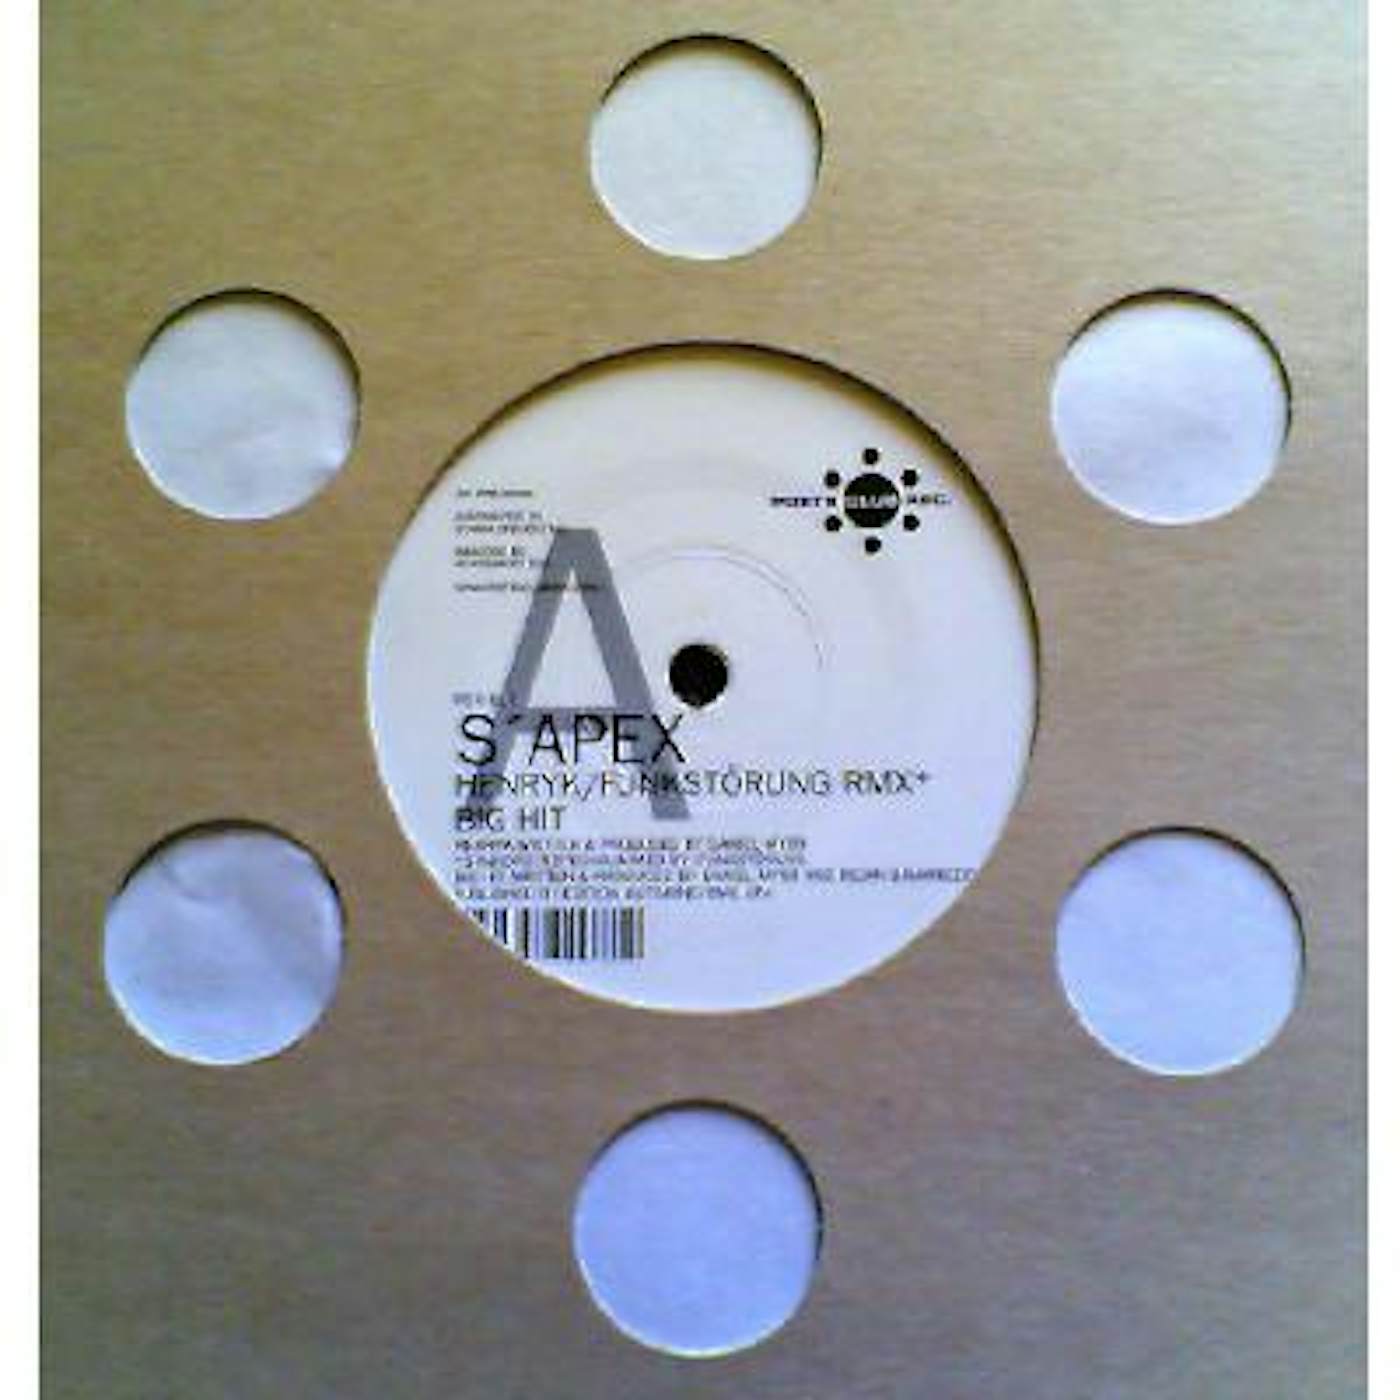 S'Apex HENRYK (FUNKSTORUNG RMX) Vinyl Record - Australia Release